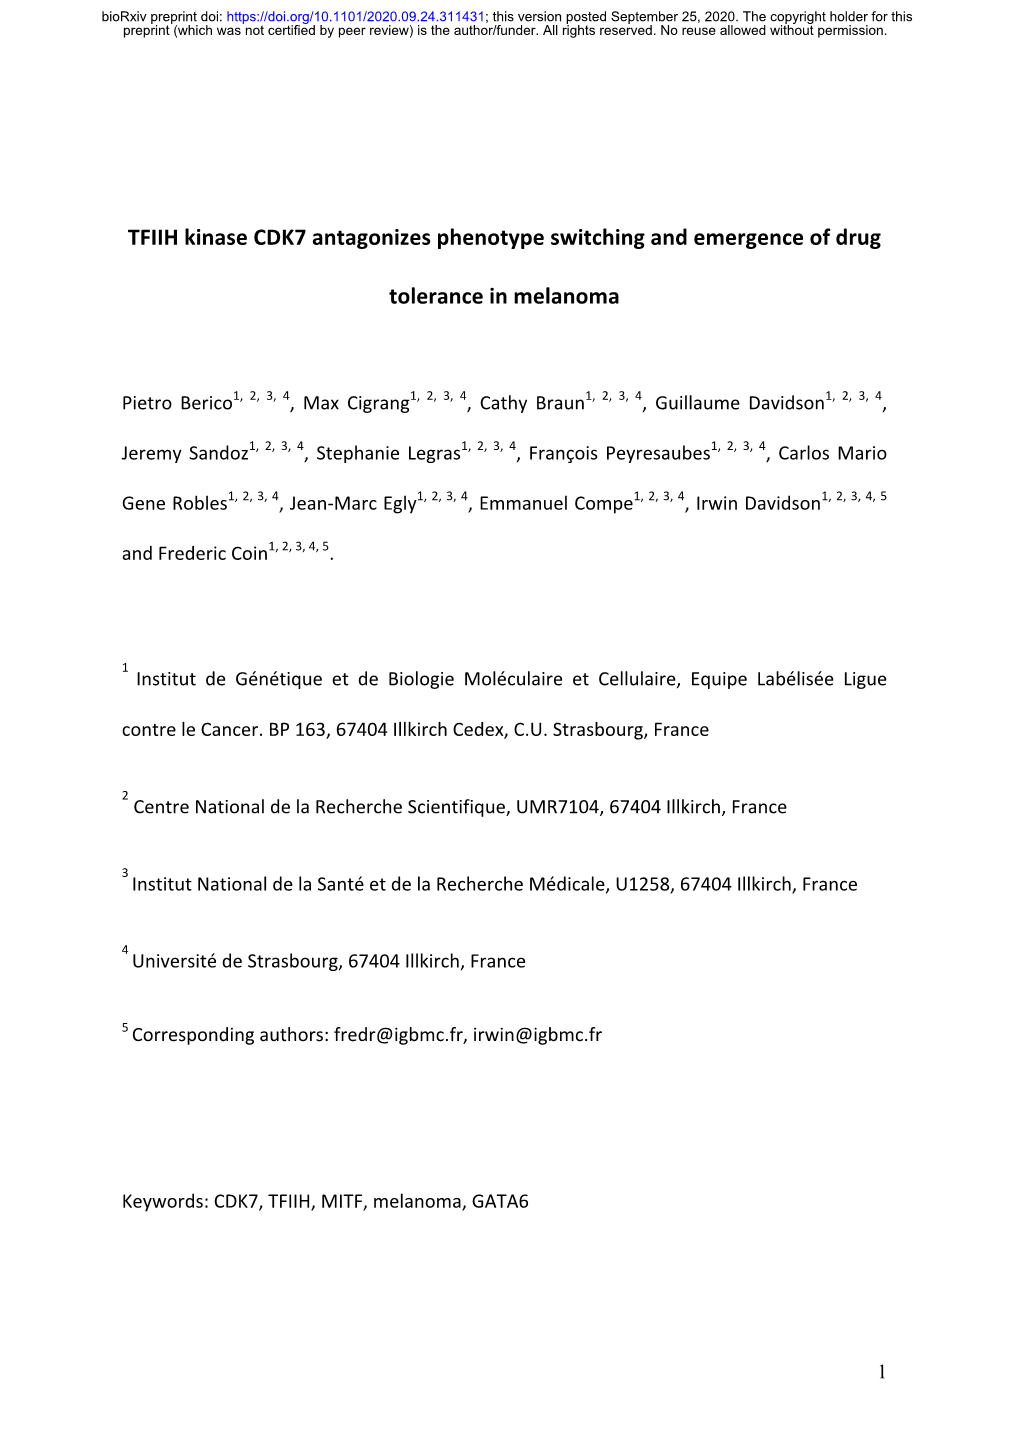 TFIIH Kinase CDK7 Antagonizes Phenotype Switching and Emergence of Drug Tolerance in Melanoma